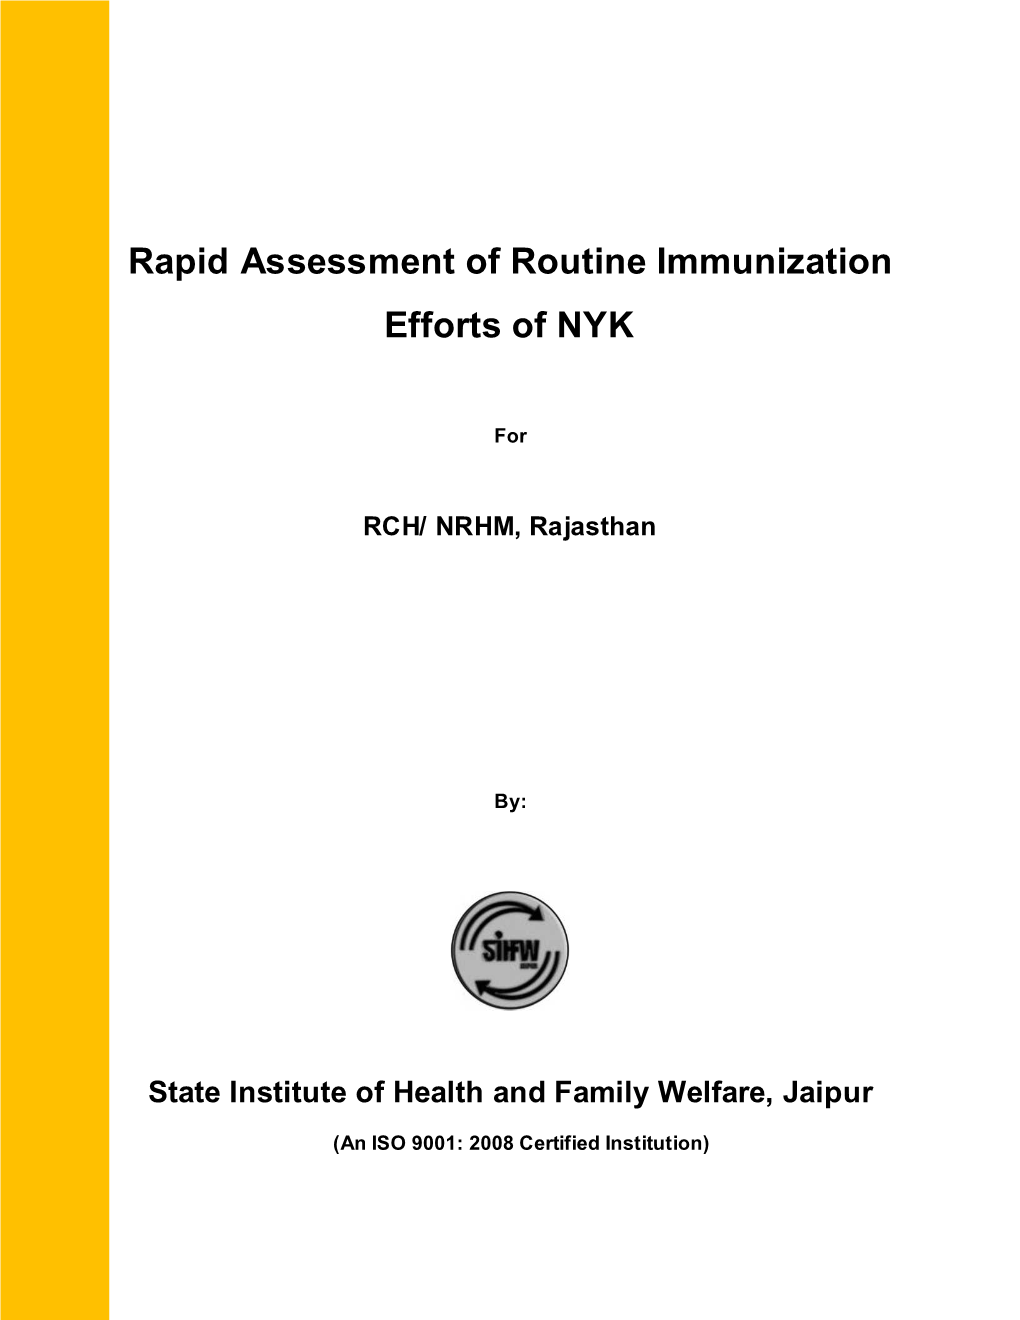 Rapid Assessment of Routine Immunization Efforts of NYK